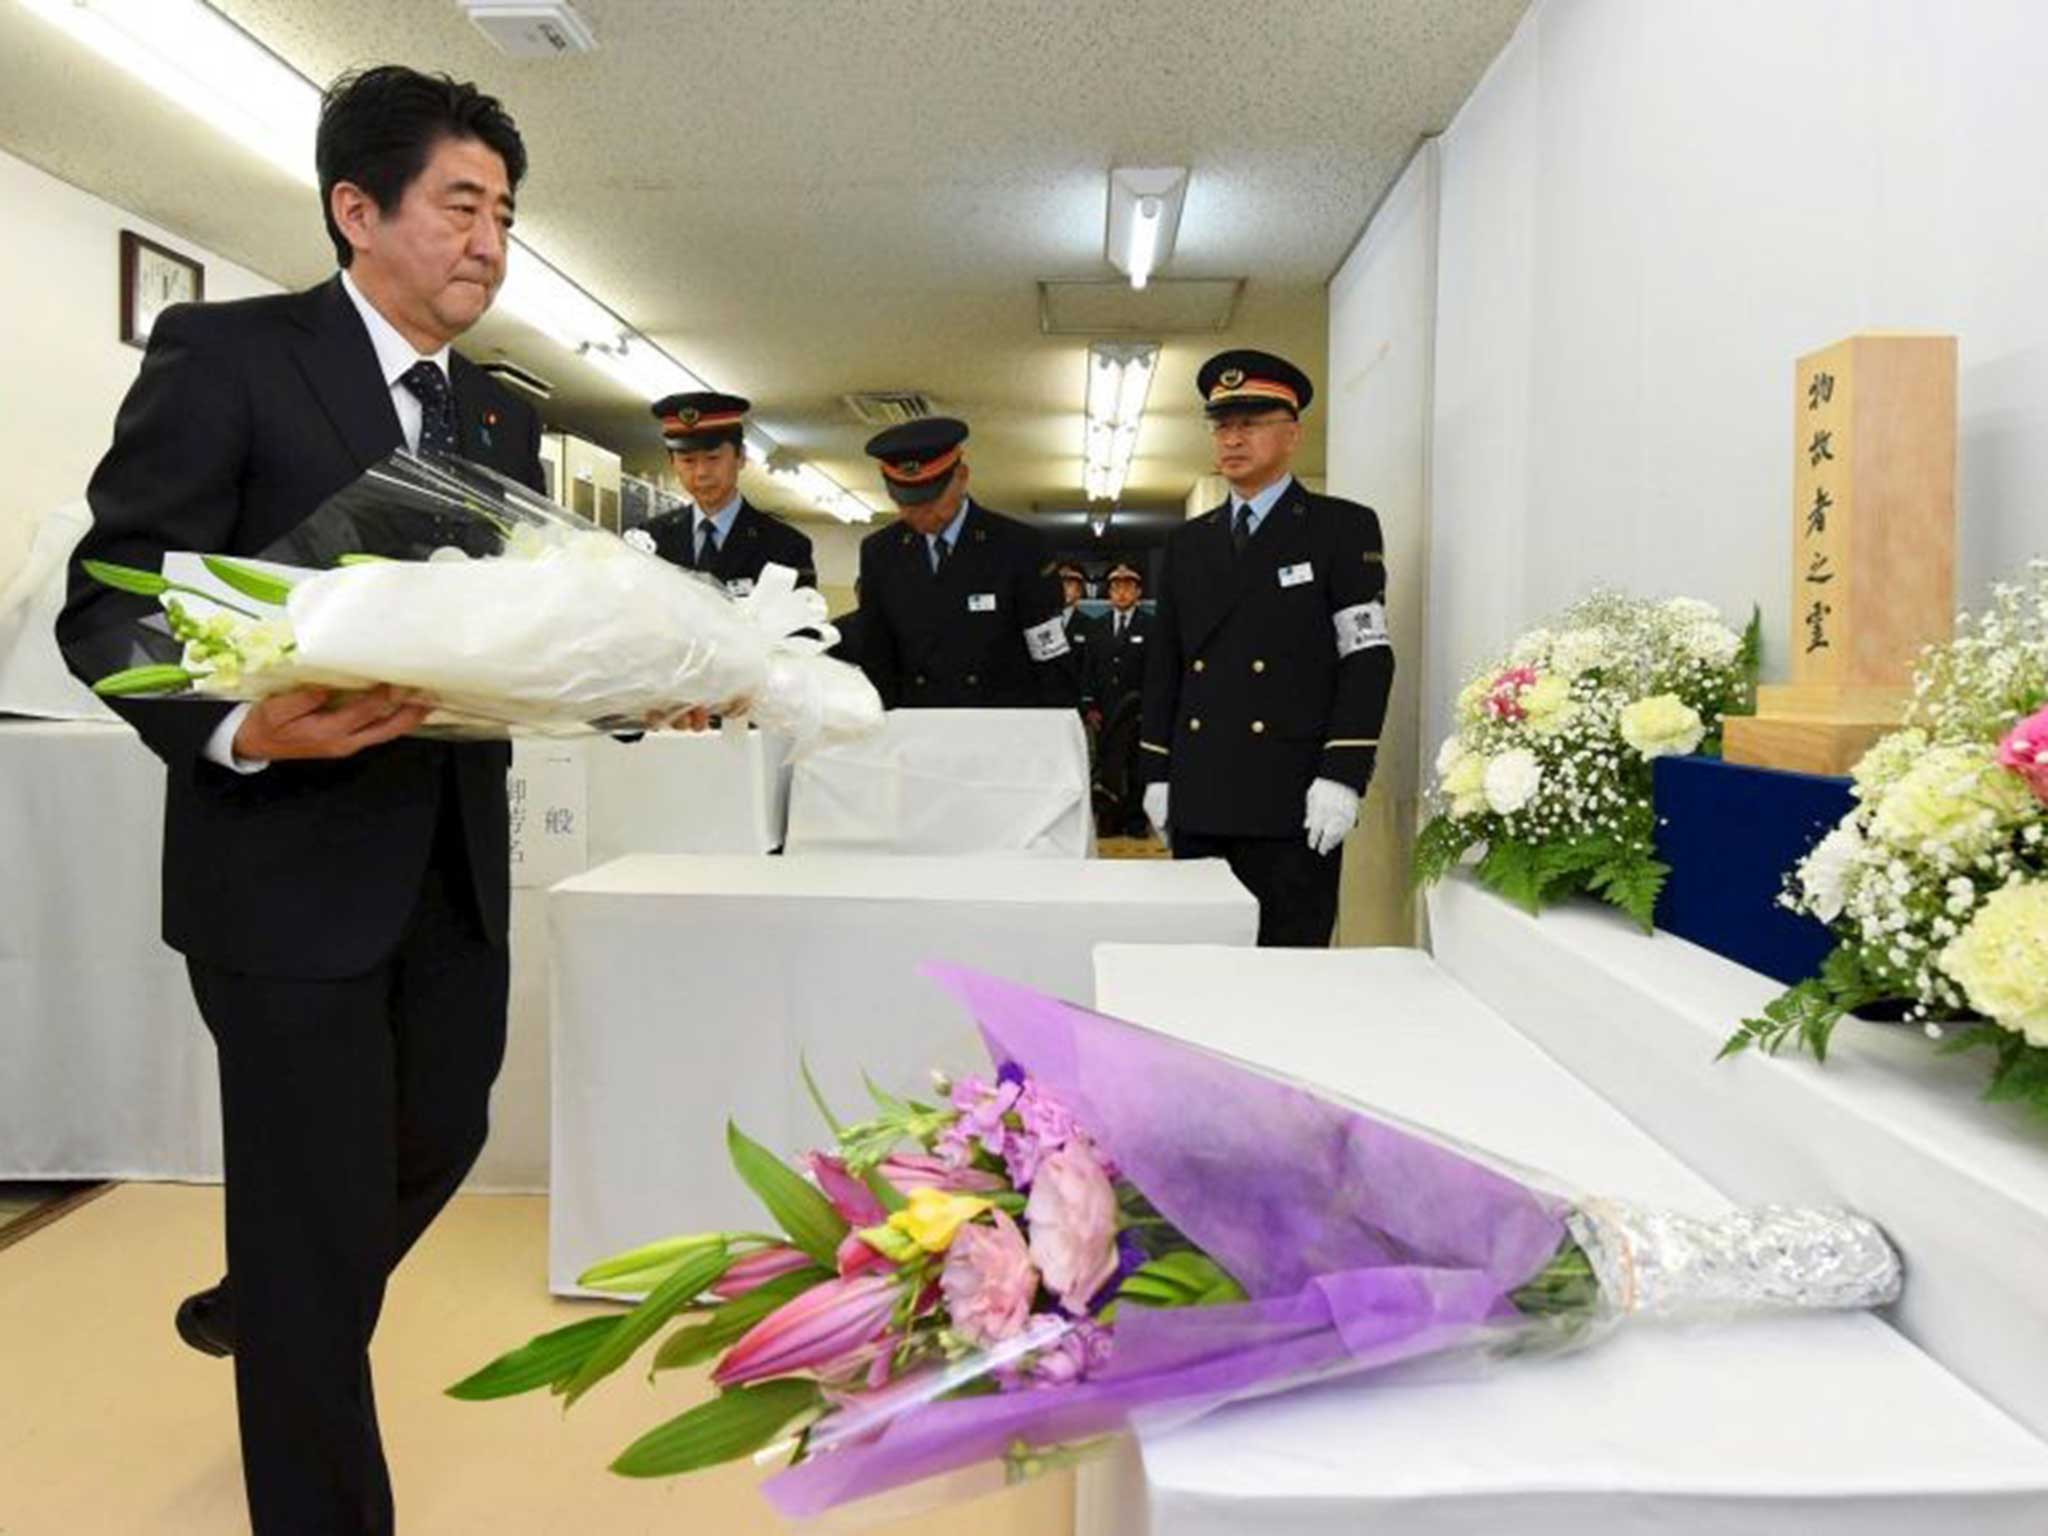 Prime Minister Shinzo Abe lays flowers